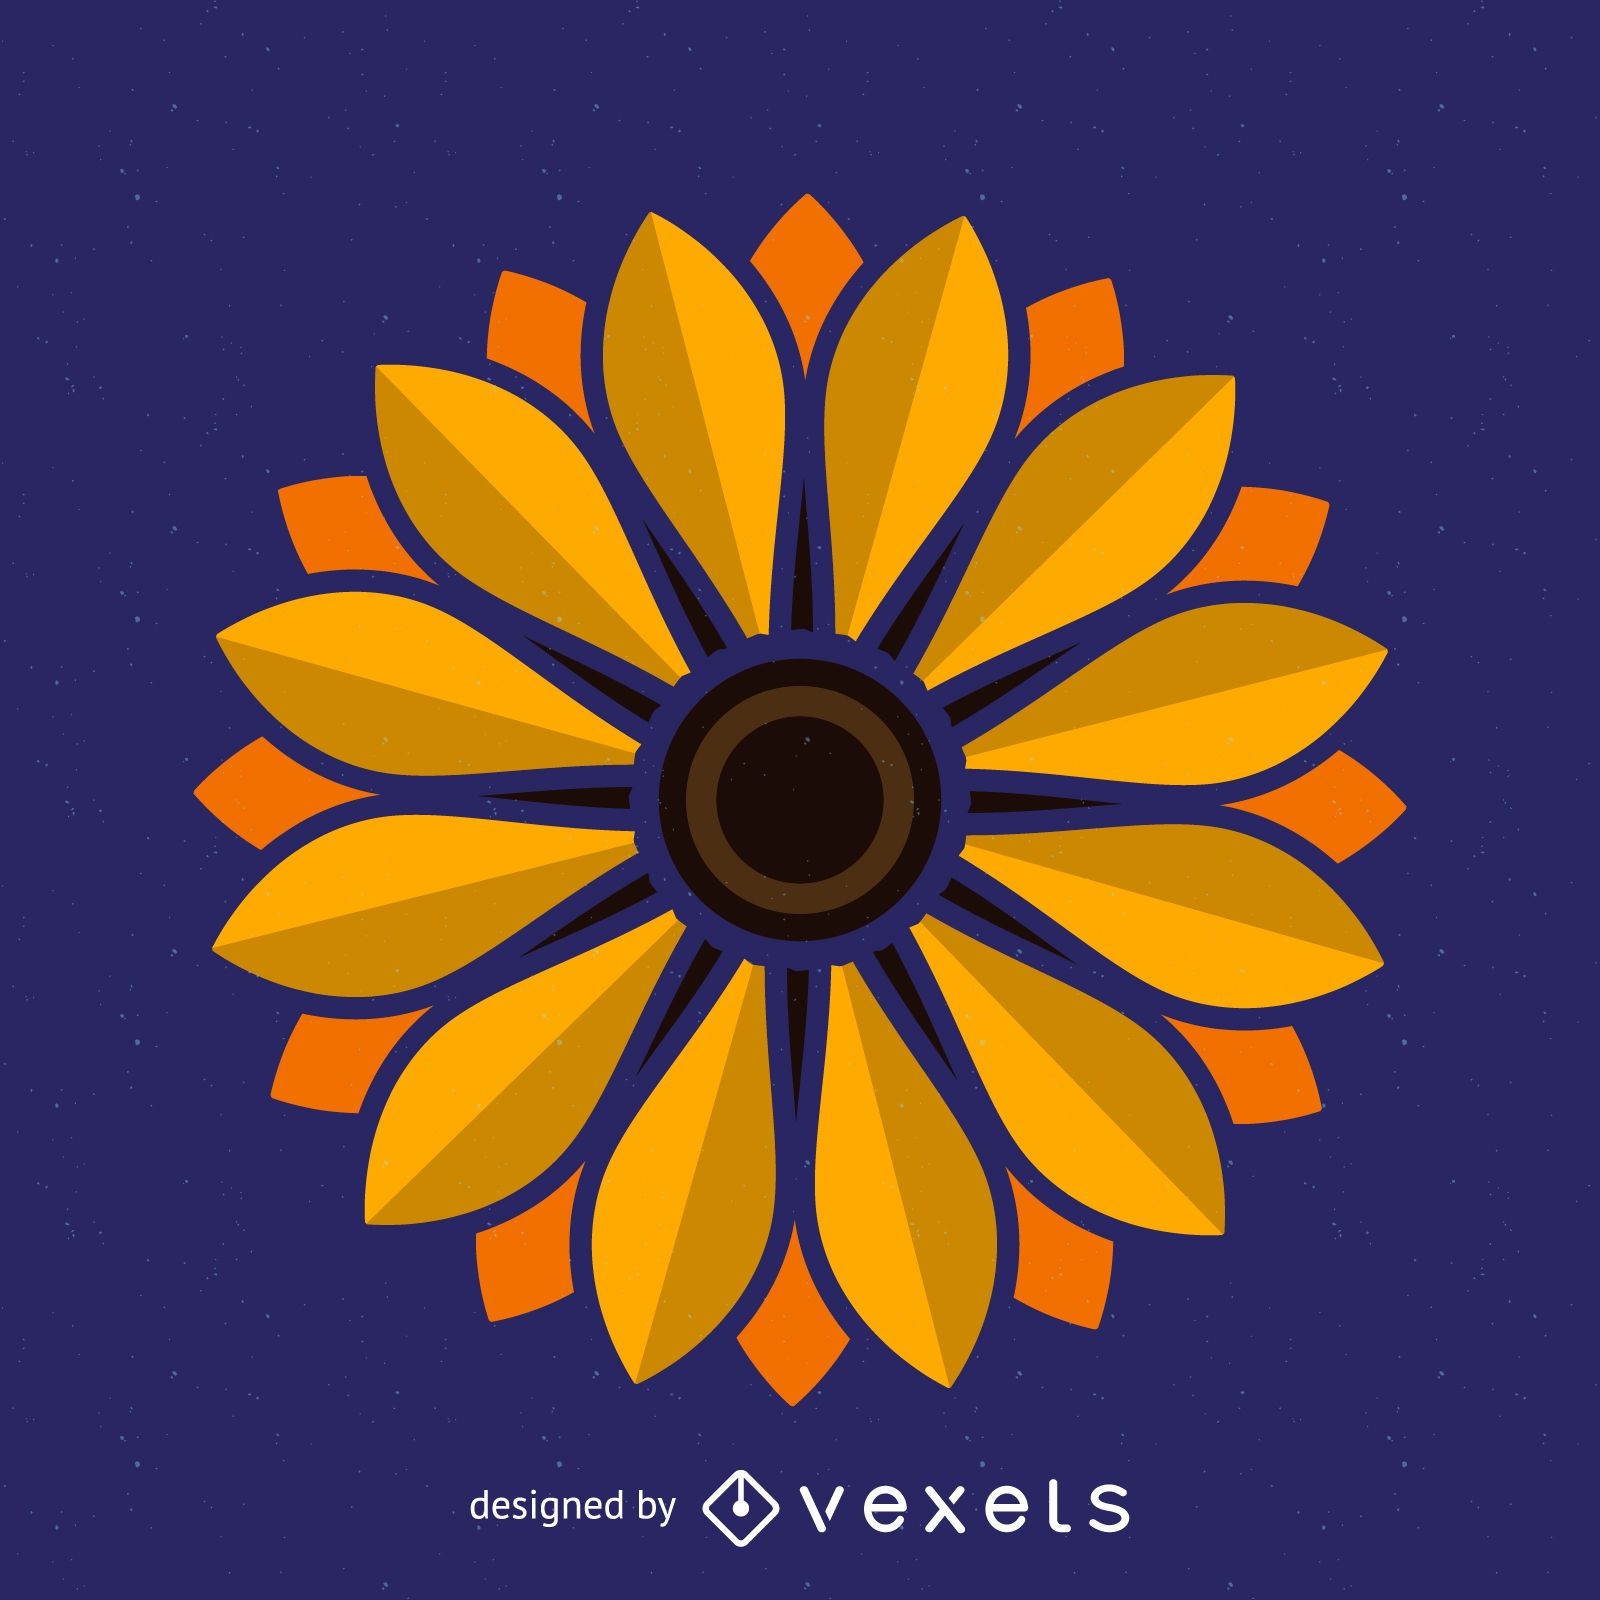 Minimalist Sunflower Illustration Vector Download